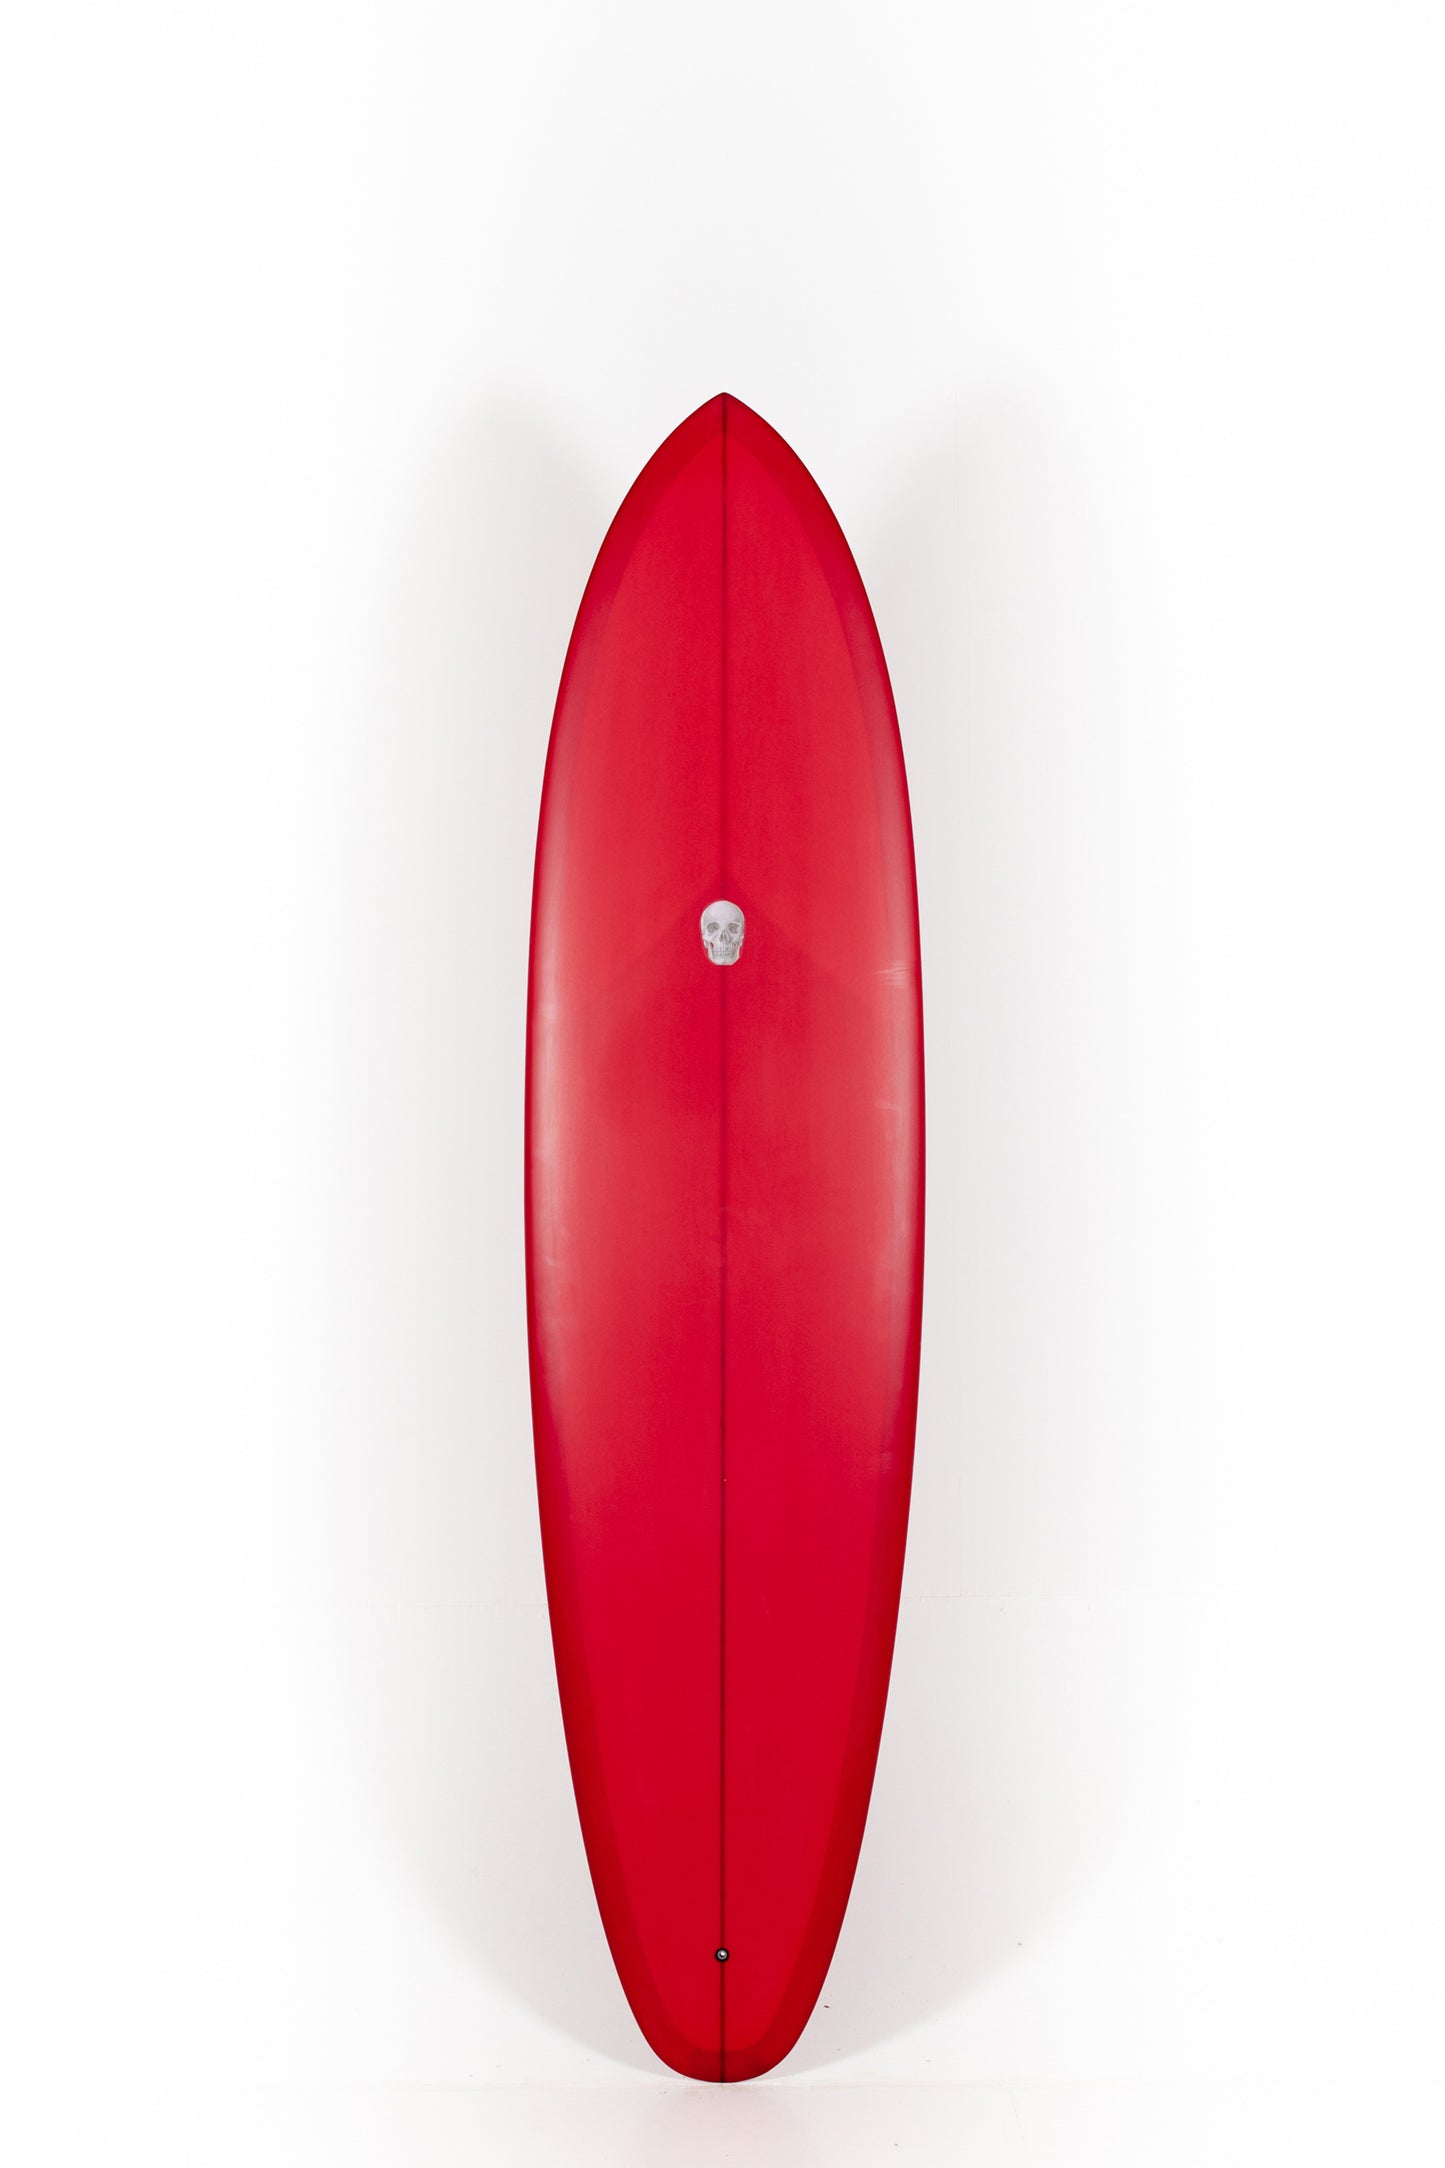 Pukas Surf Shop - Christenson Surfboards - FLAT TRACKER 2.0 - 7'4" x 21 1/4 x 2 7/8 - CX03151